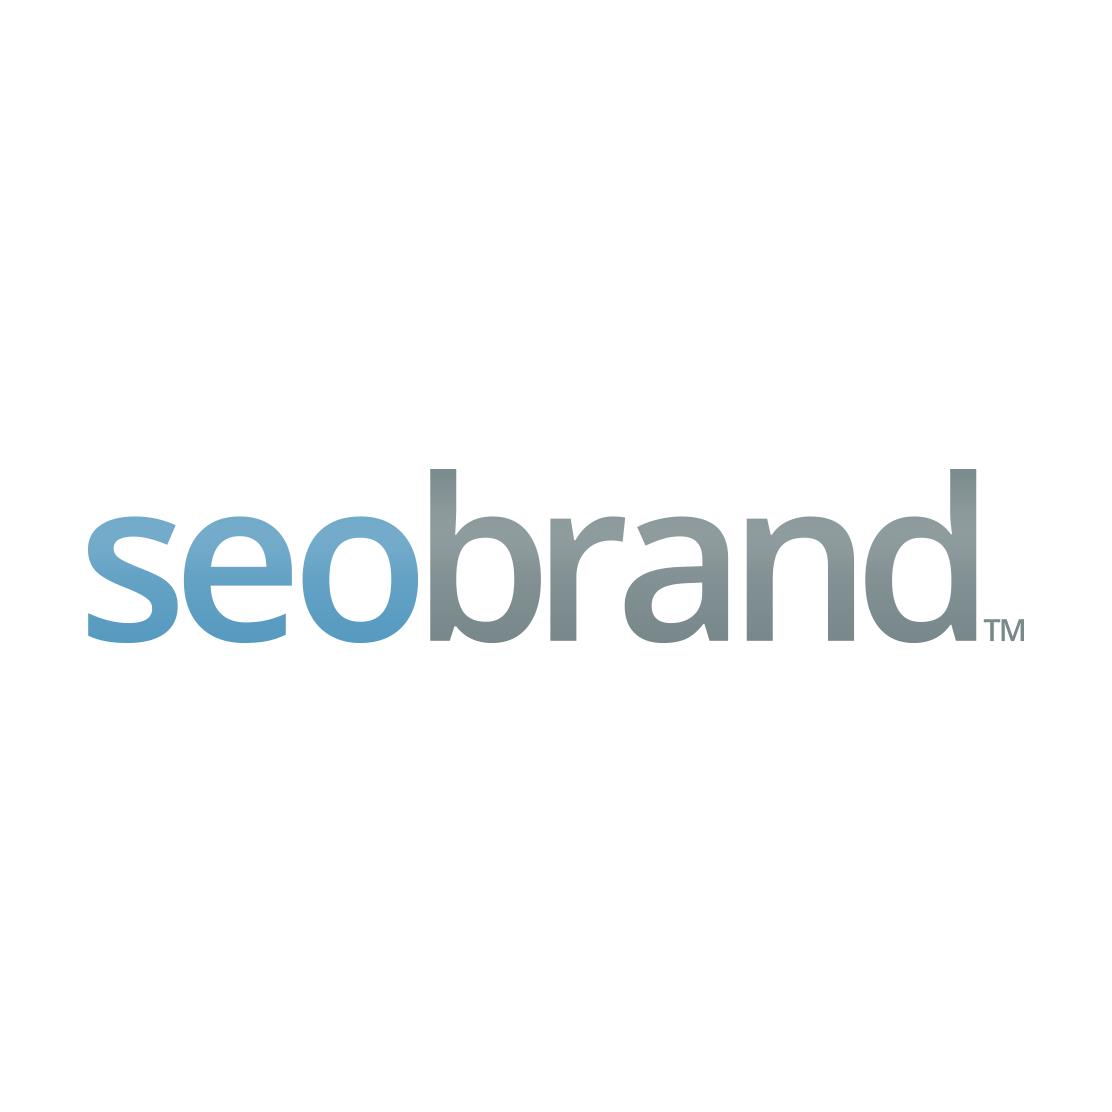 Best Social Media Marketing Firm Logo: SEO Brand